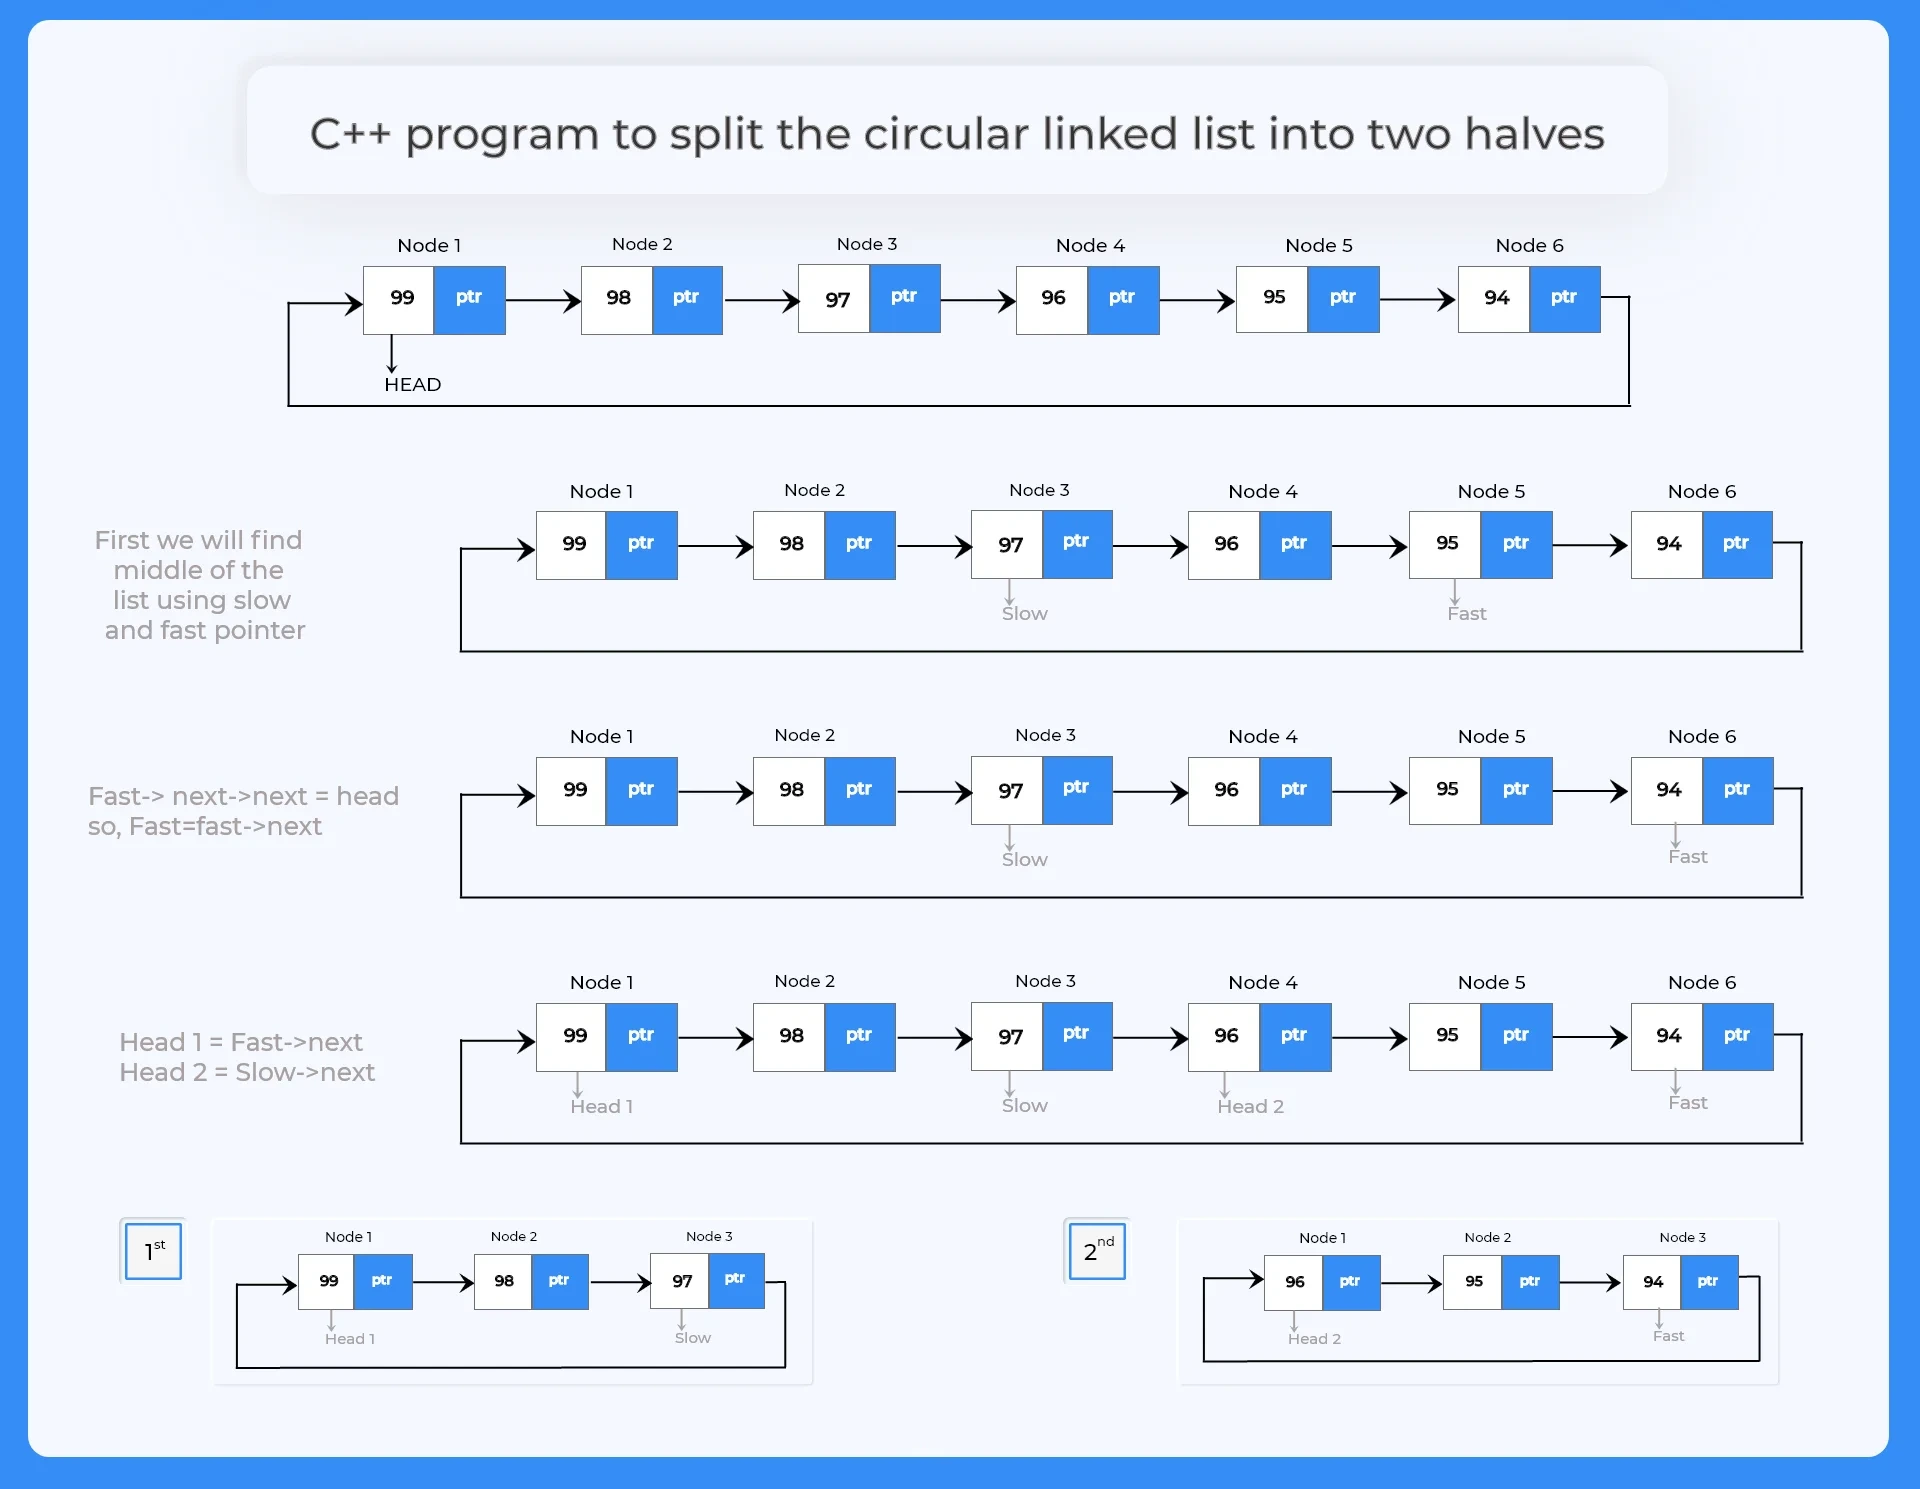 C++ program to split a circular linked list